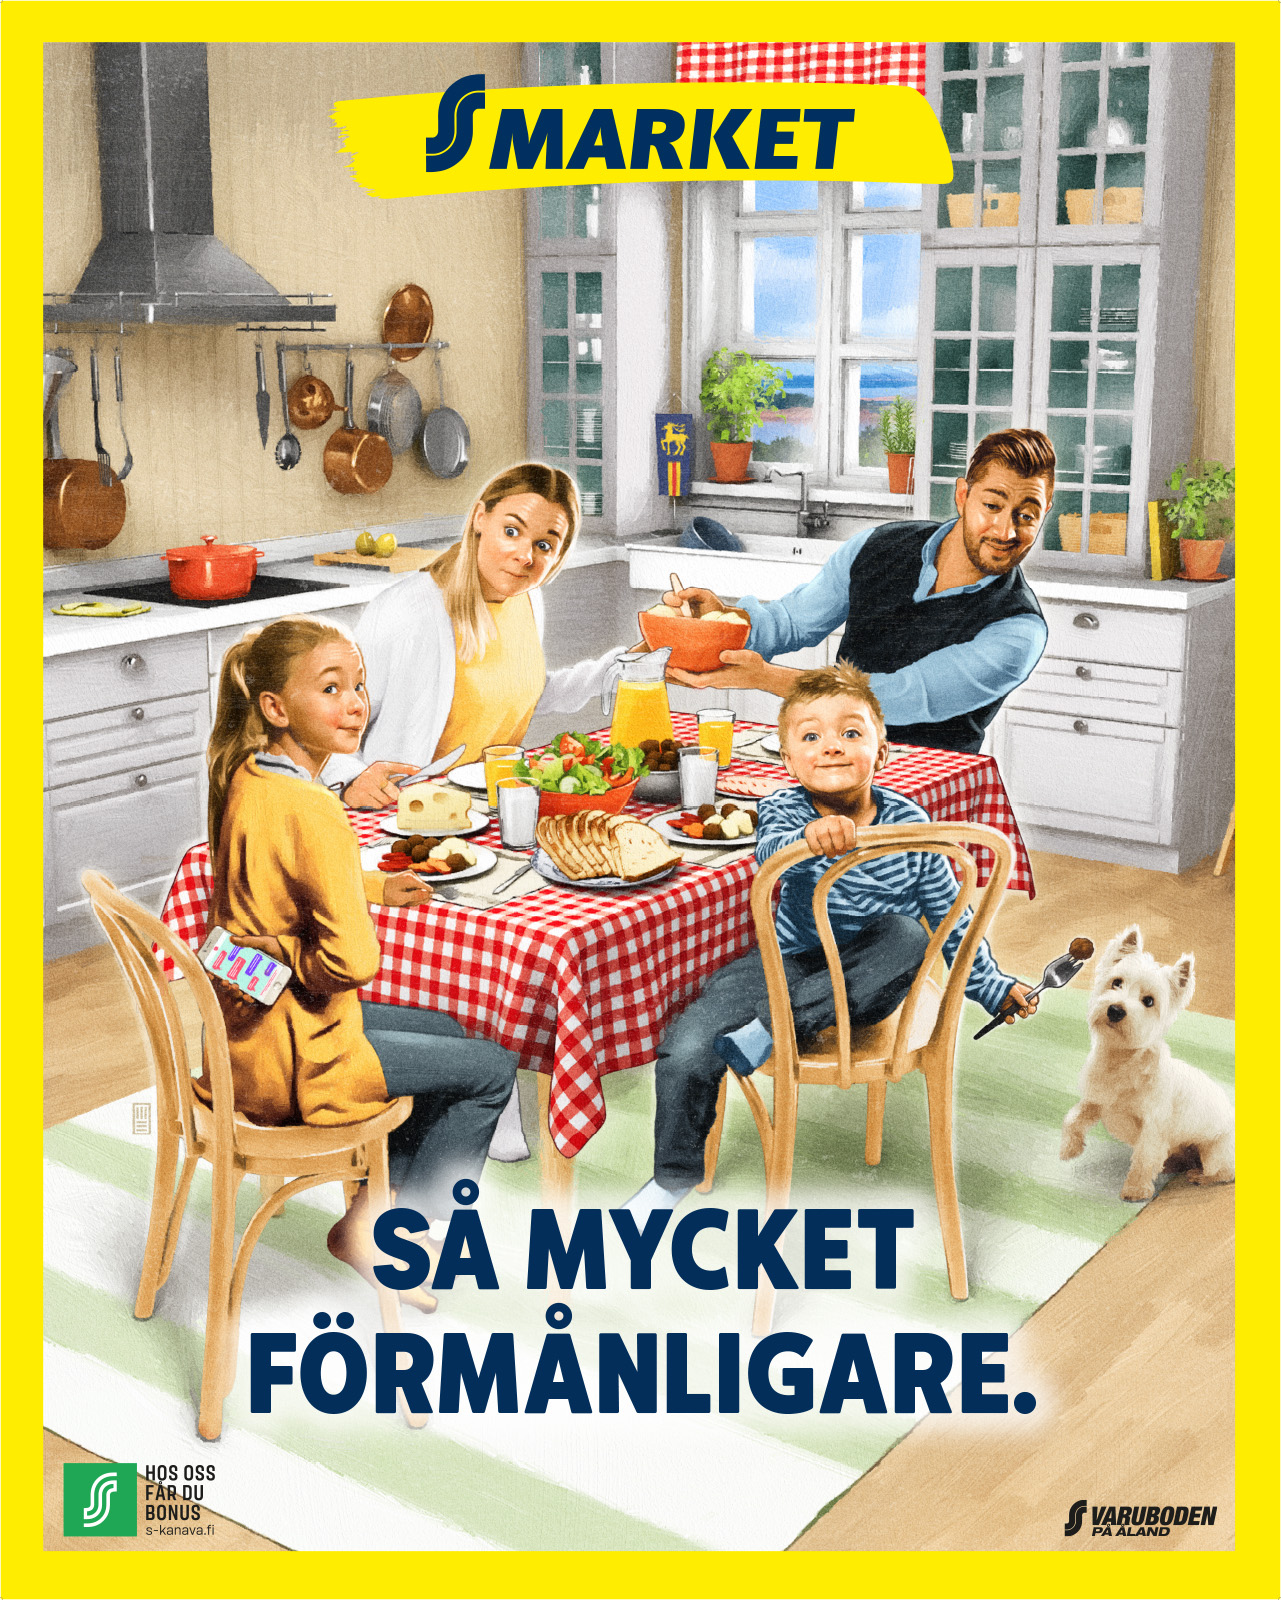 S market poster family Åland